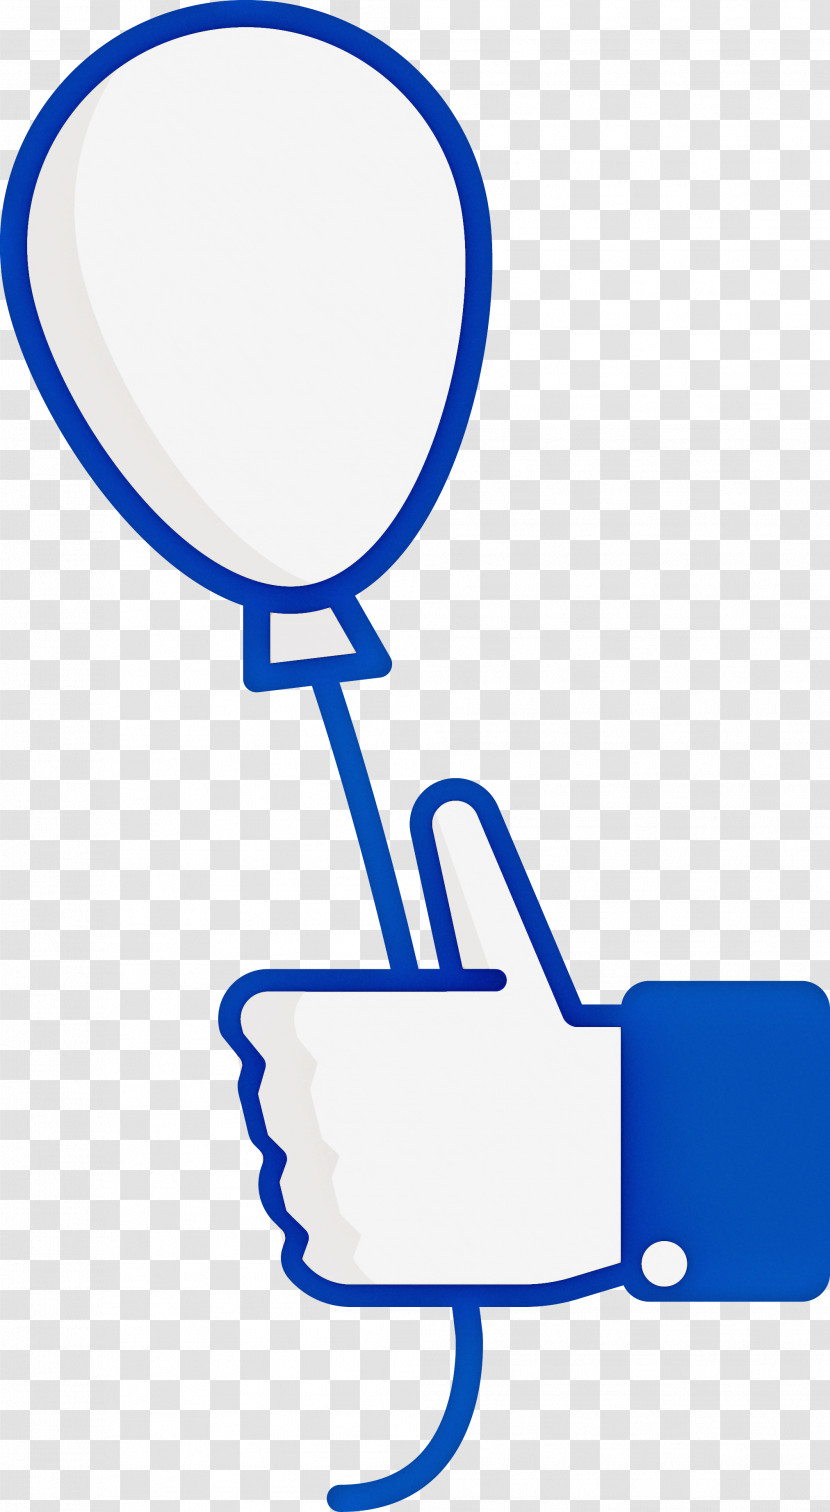 Thumbs Up Facebook Thumbs Up Transparent PNG